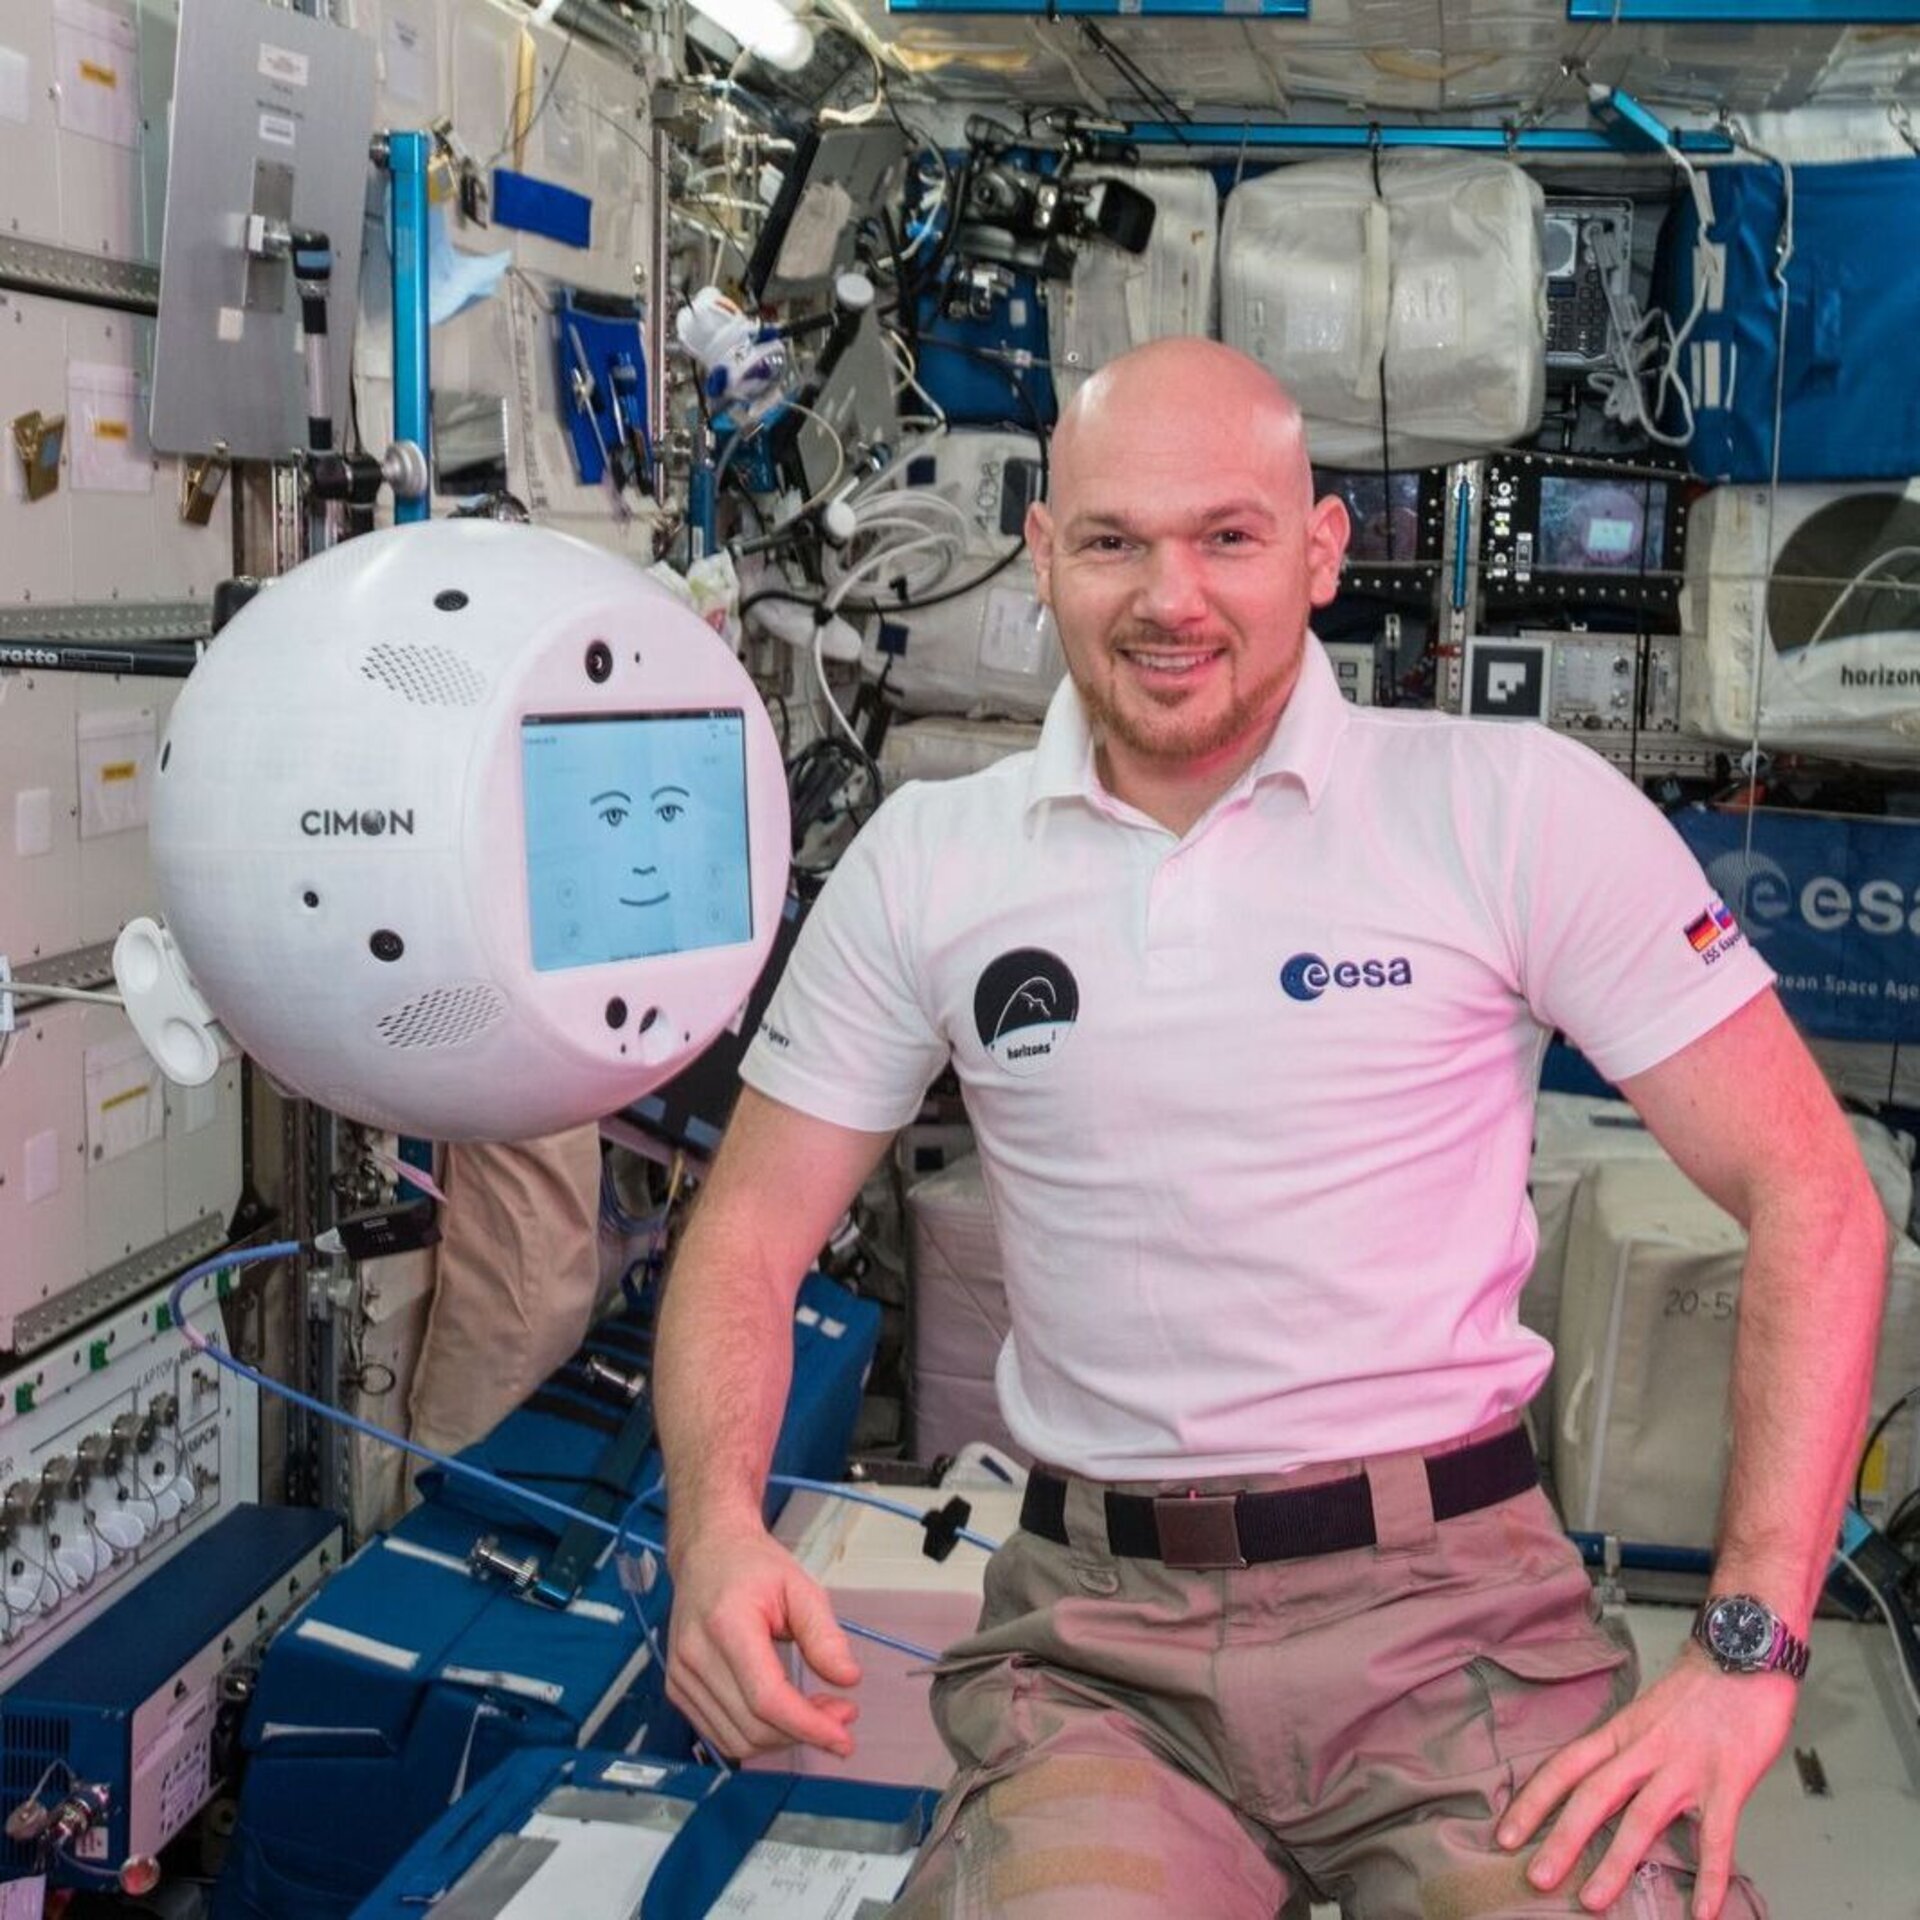 ESA astronaut Alexander Gerst welcomed CIMON